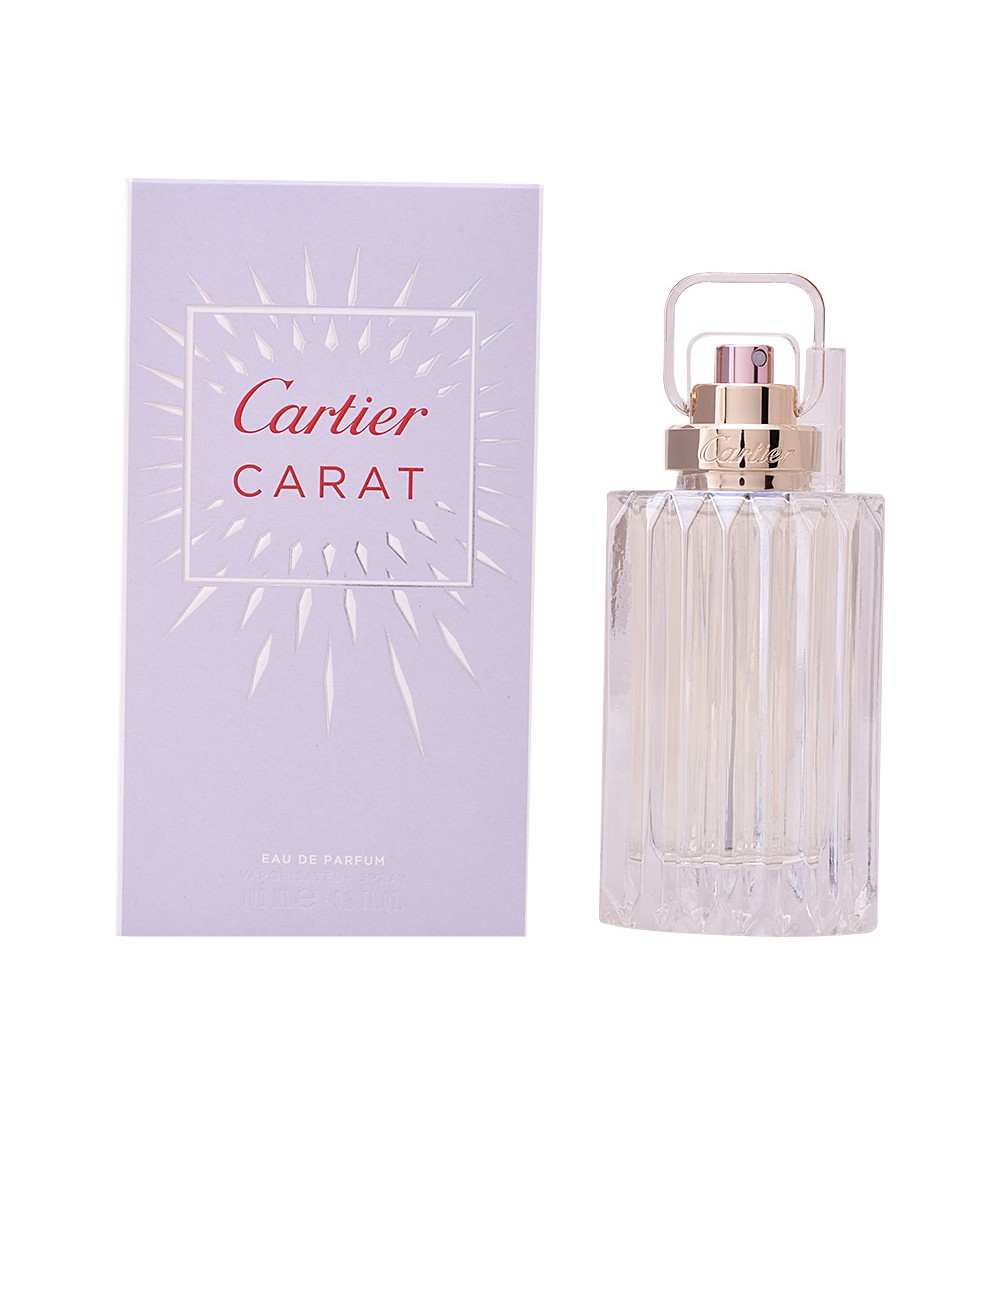 CARTIER CARAT eau de parfum vaporisateur 100 ml NE101606